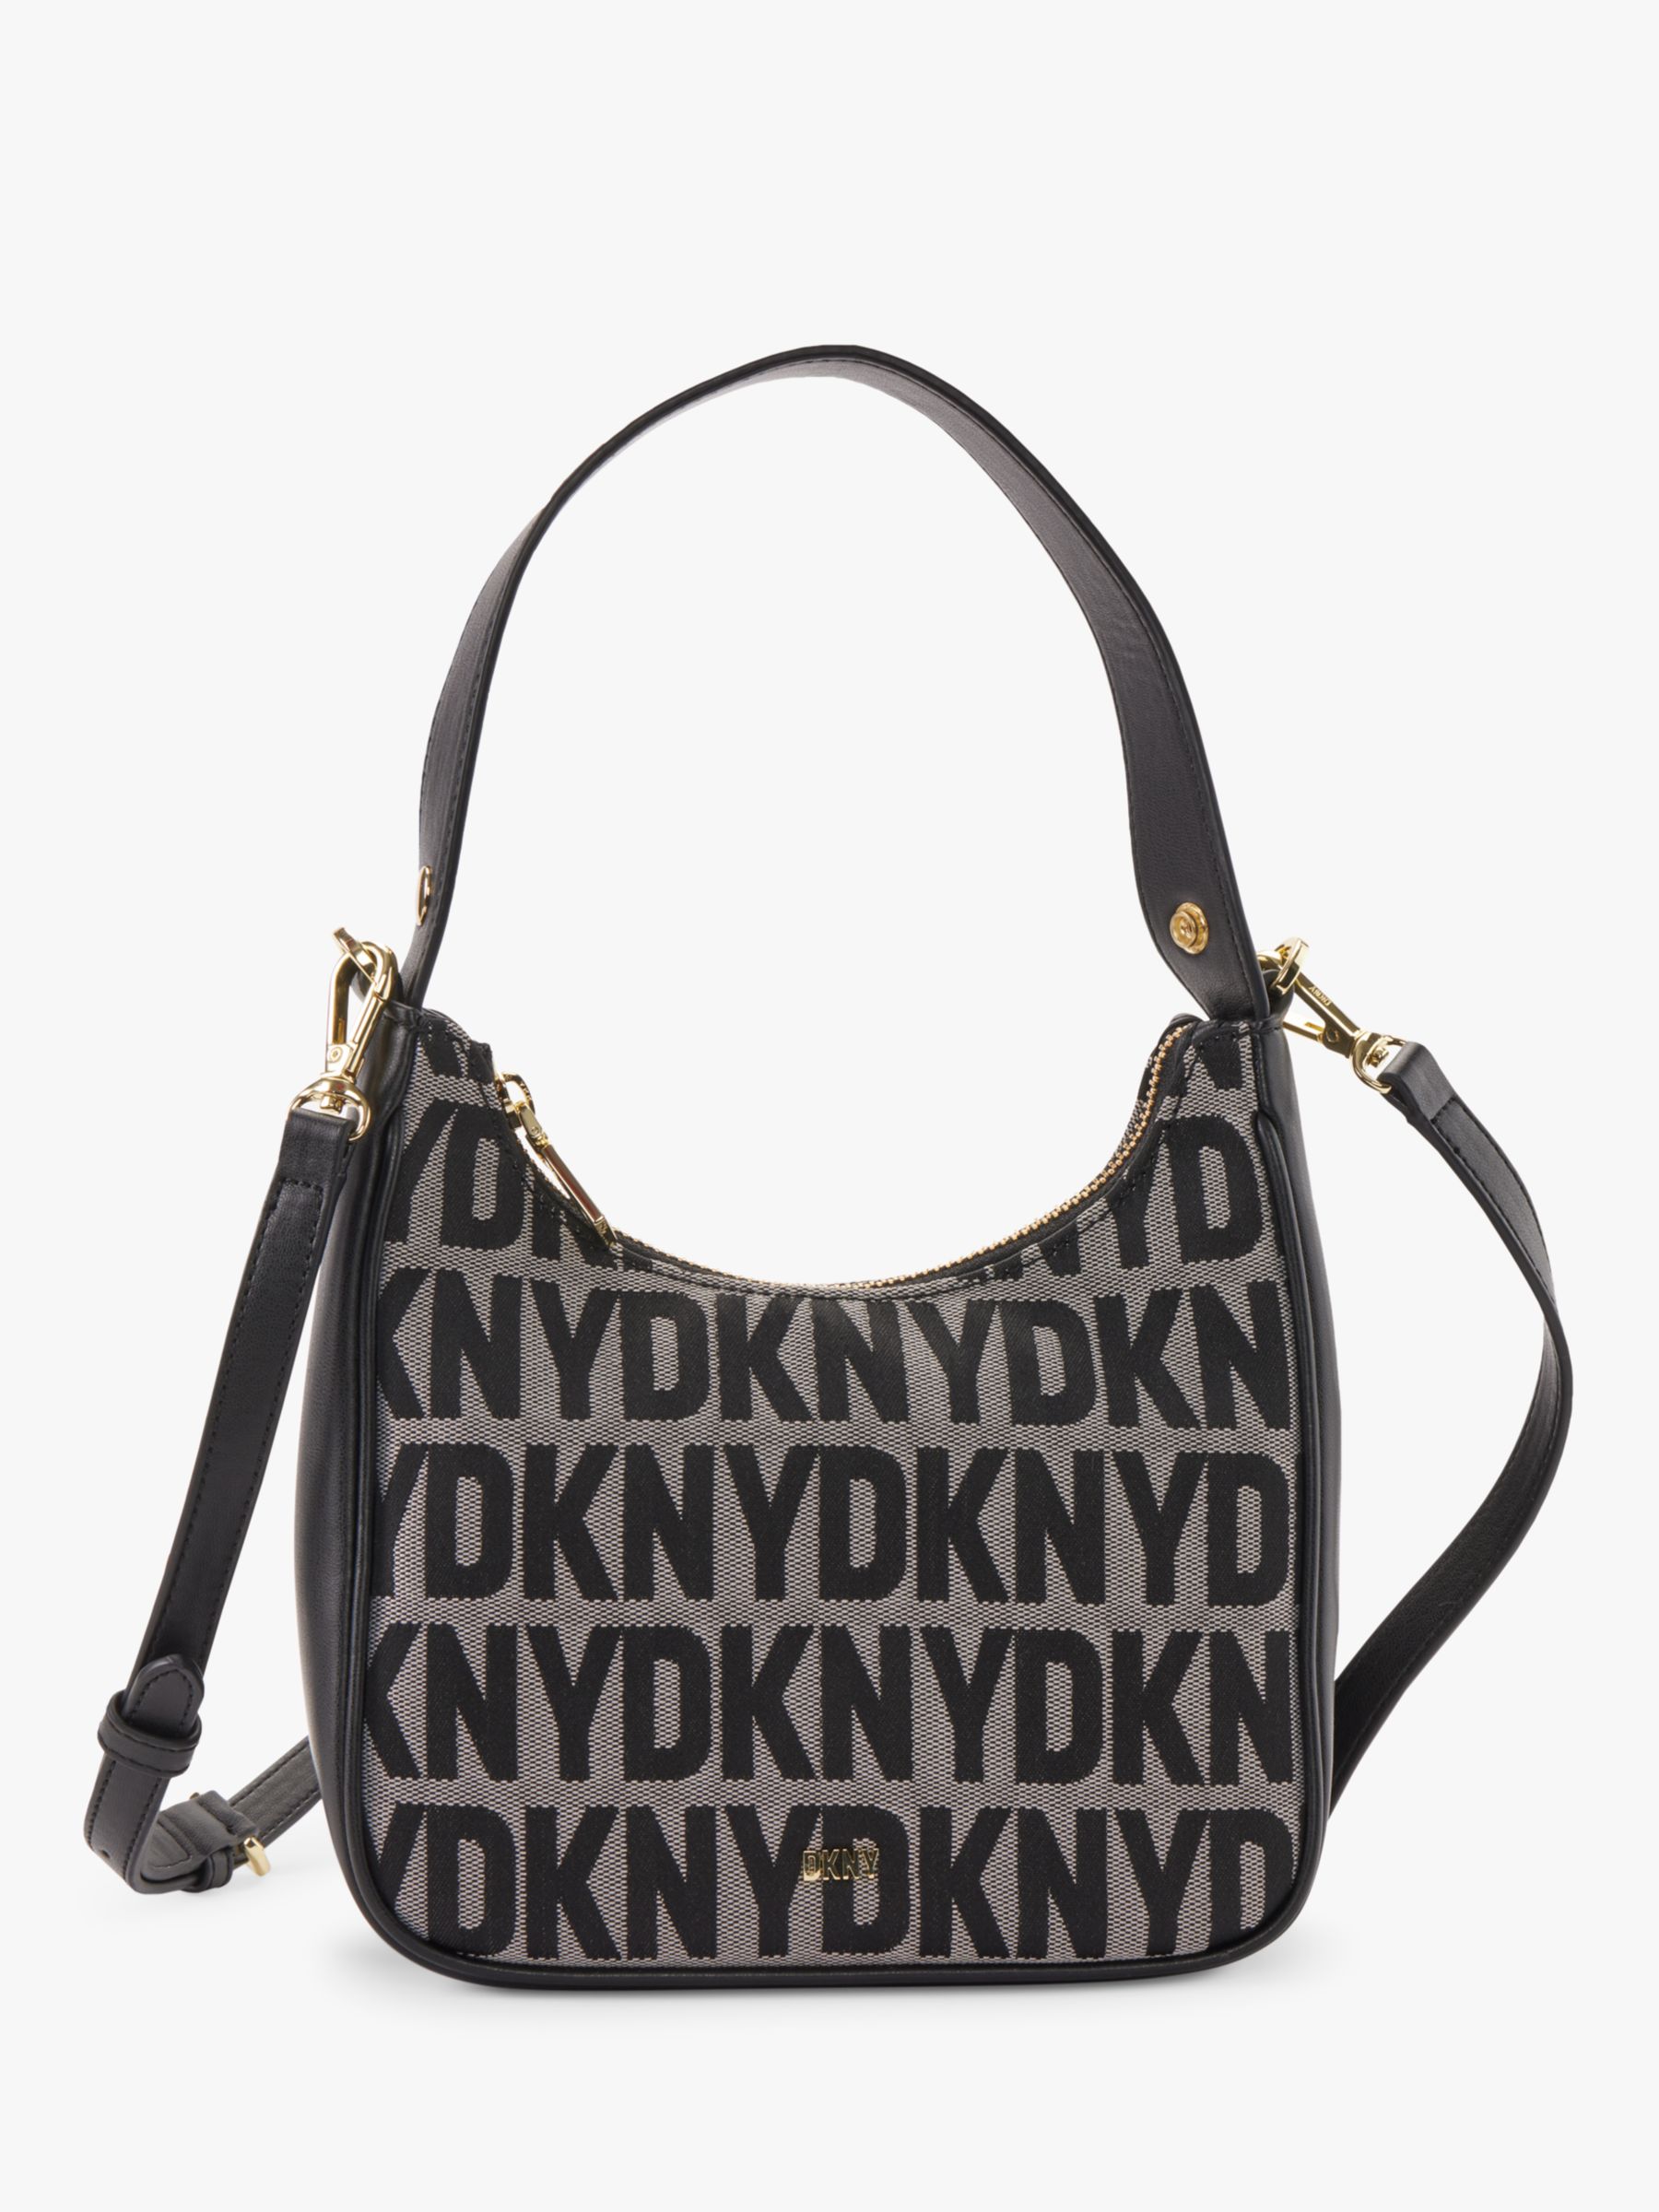 DKNY CAROL - Handbag - chino/truffle/light grey - Zalando.de